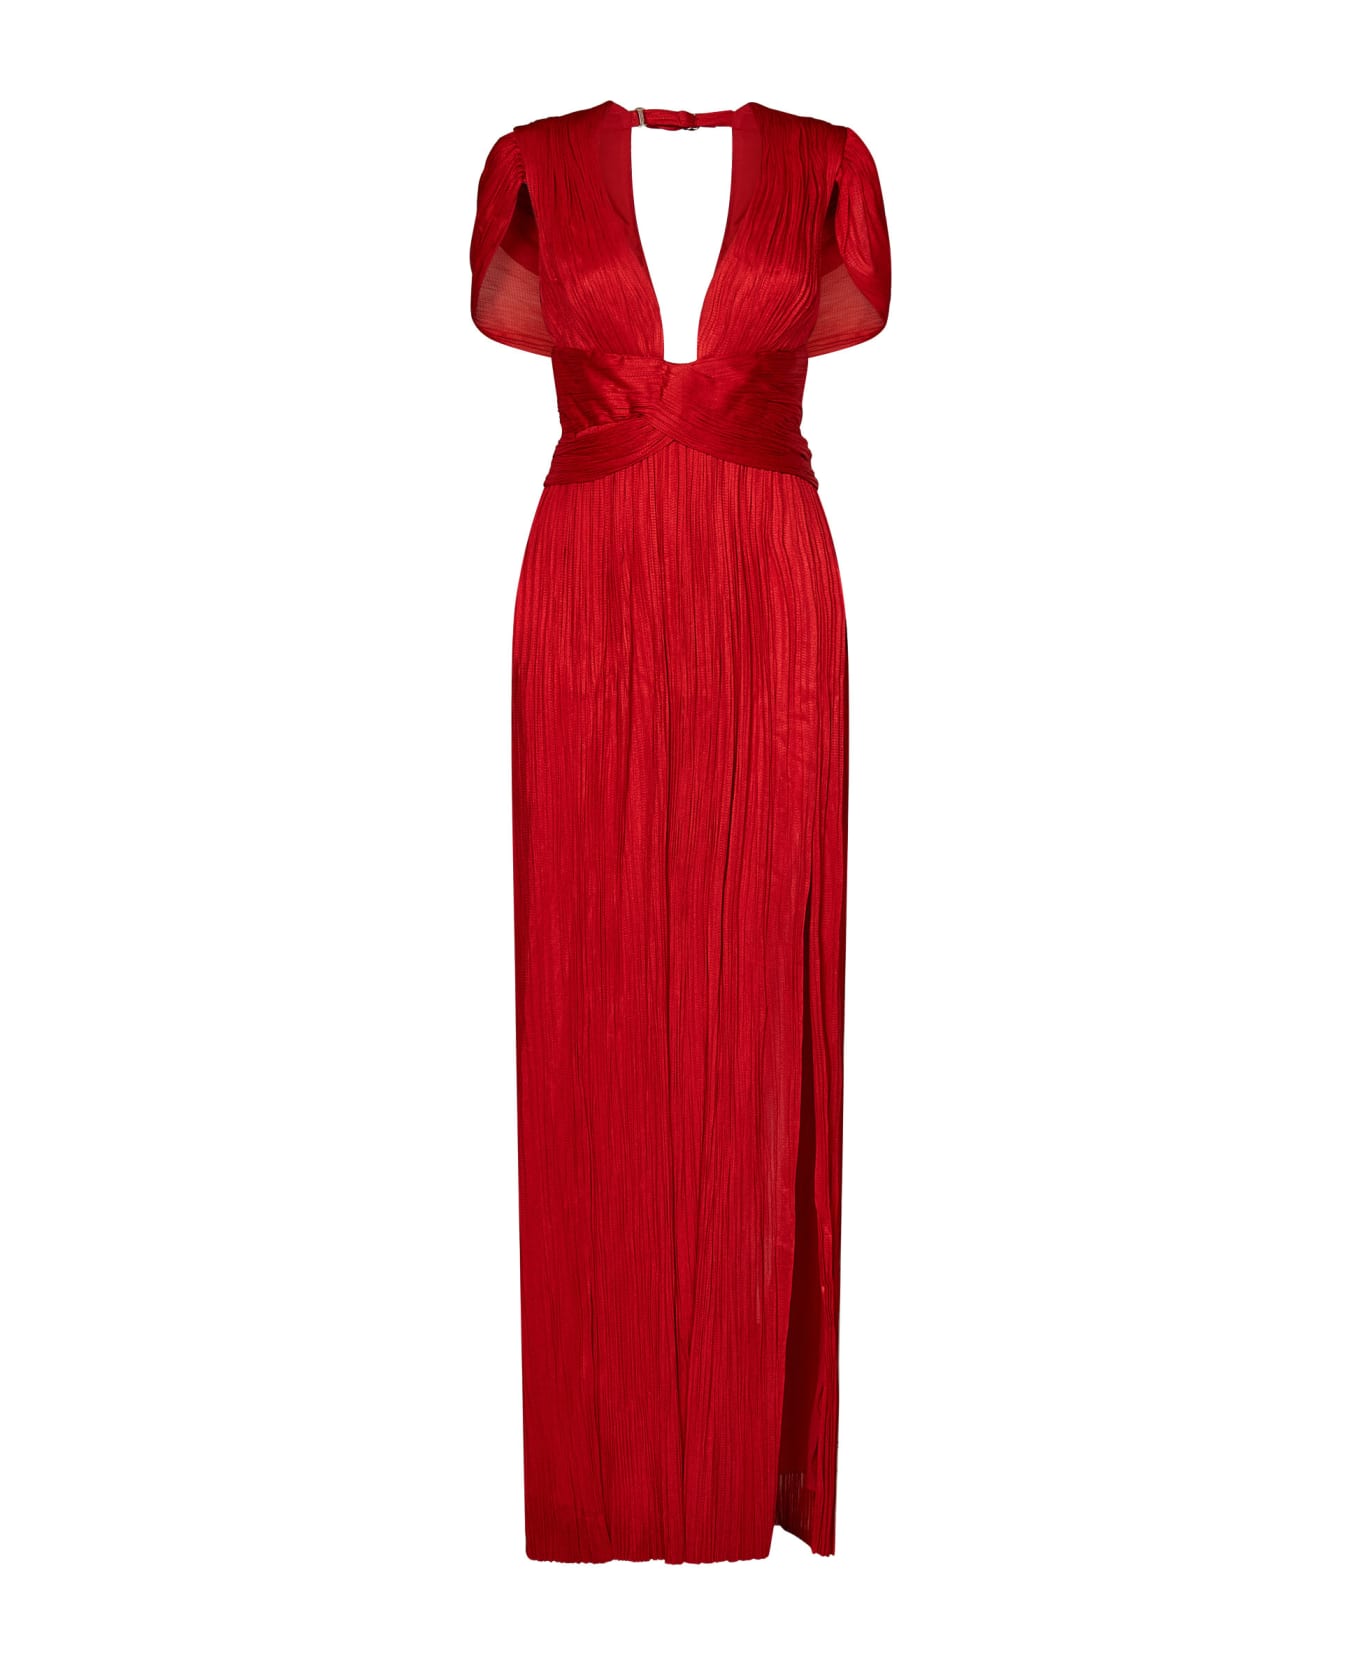 Maria Lucia Hohan Laurel Long Dress - Red